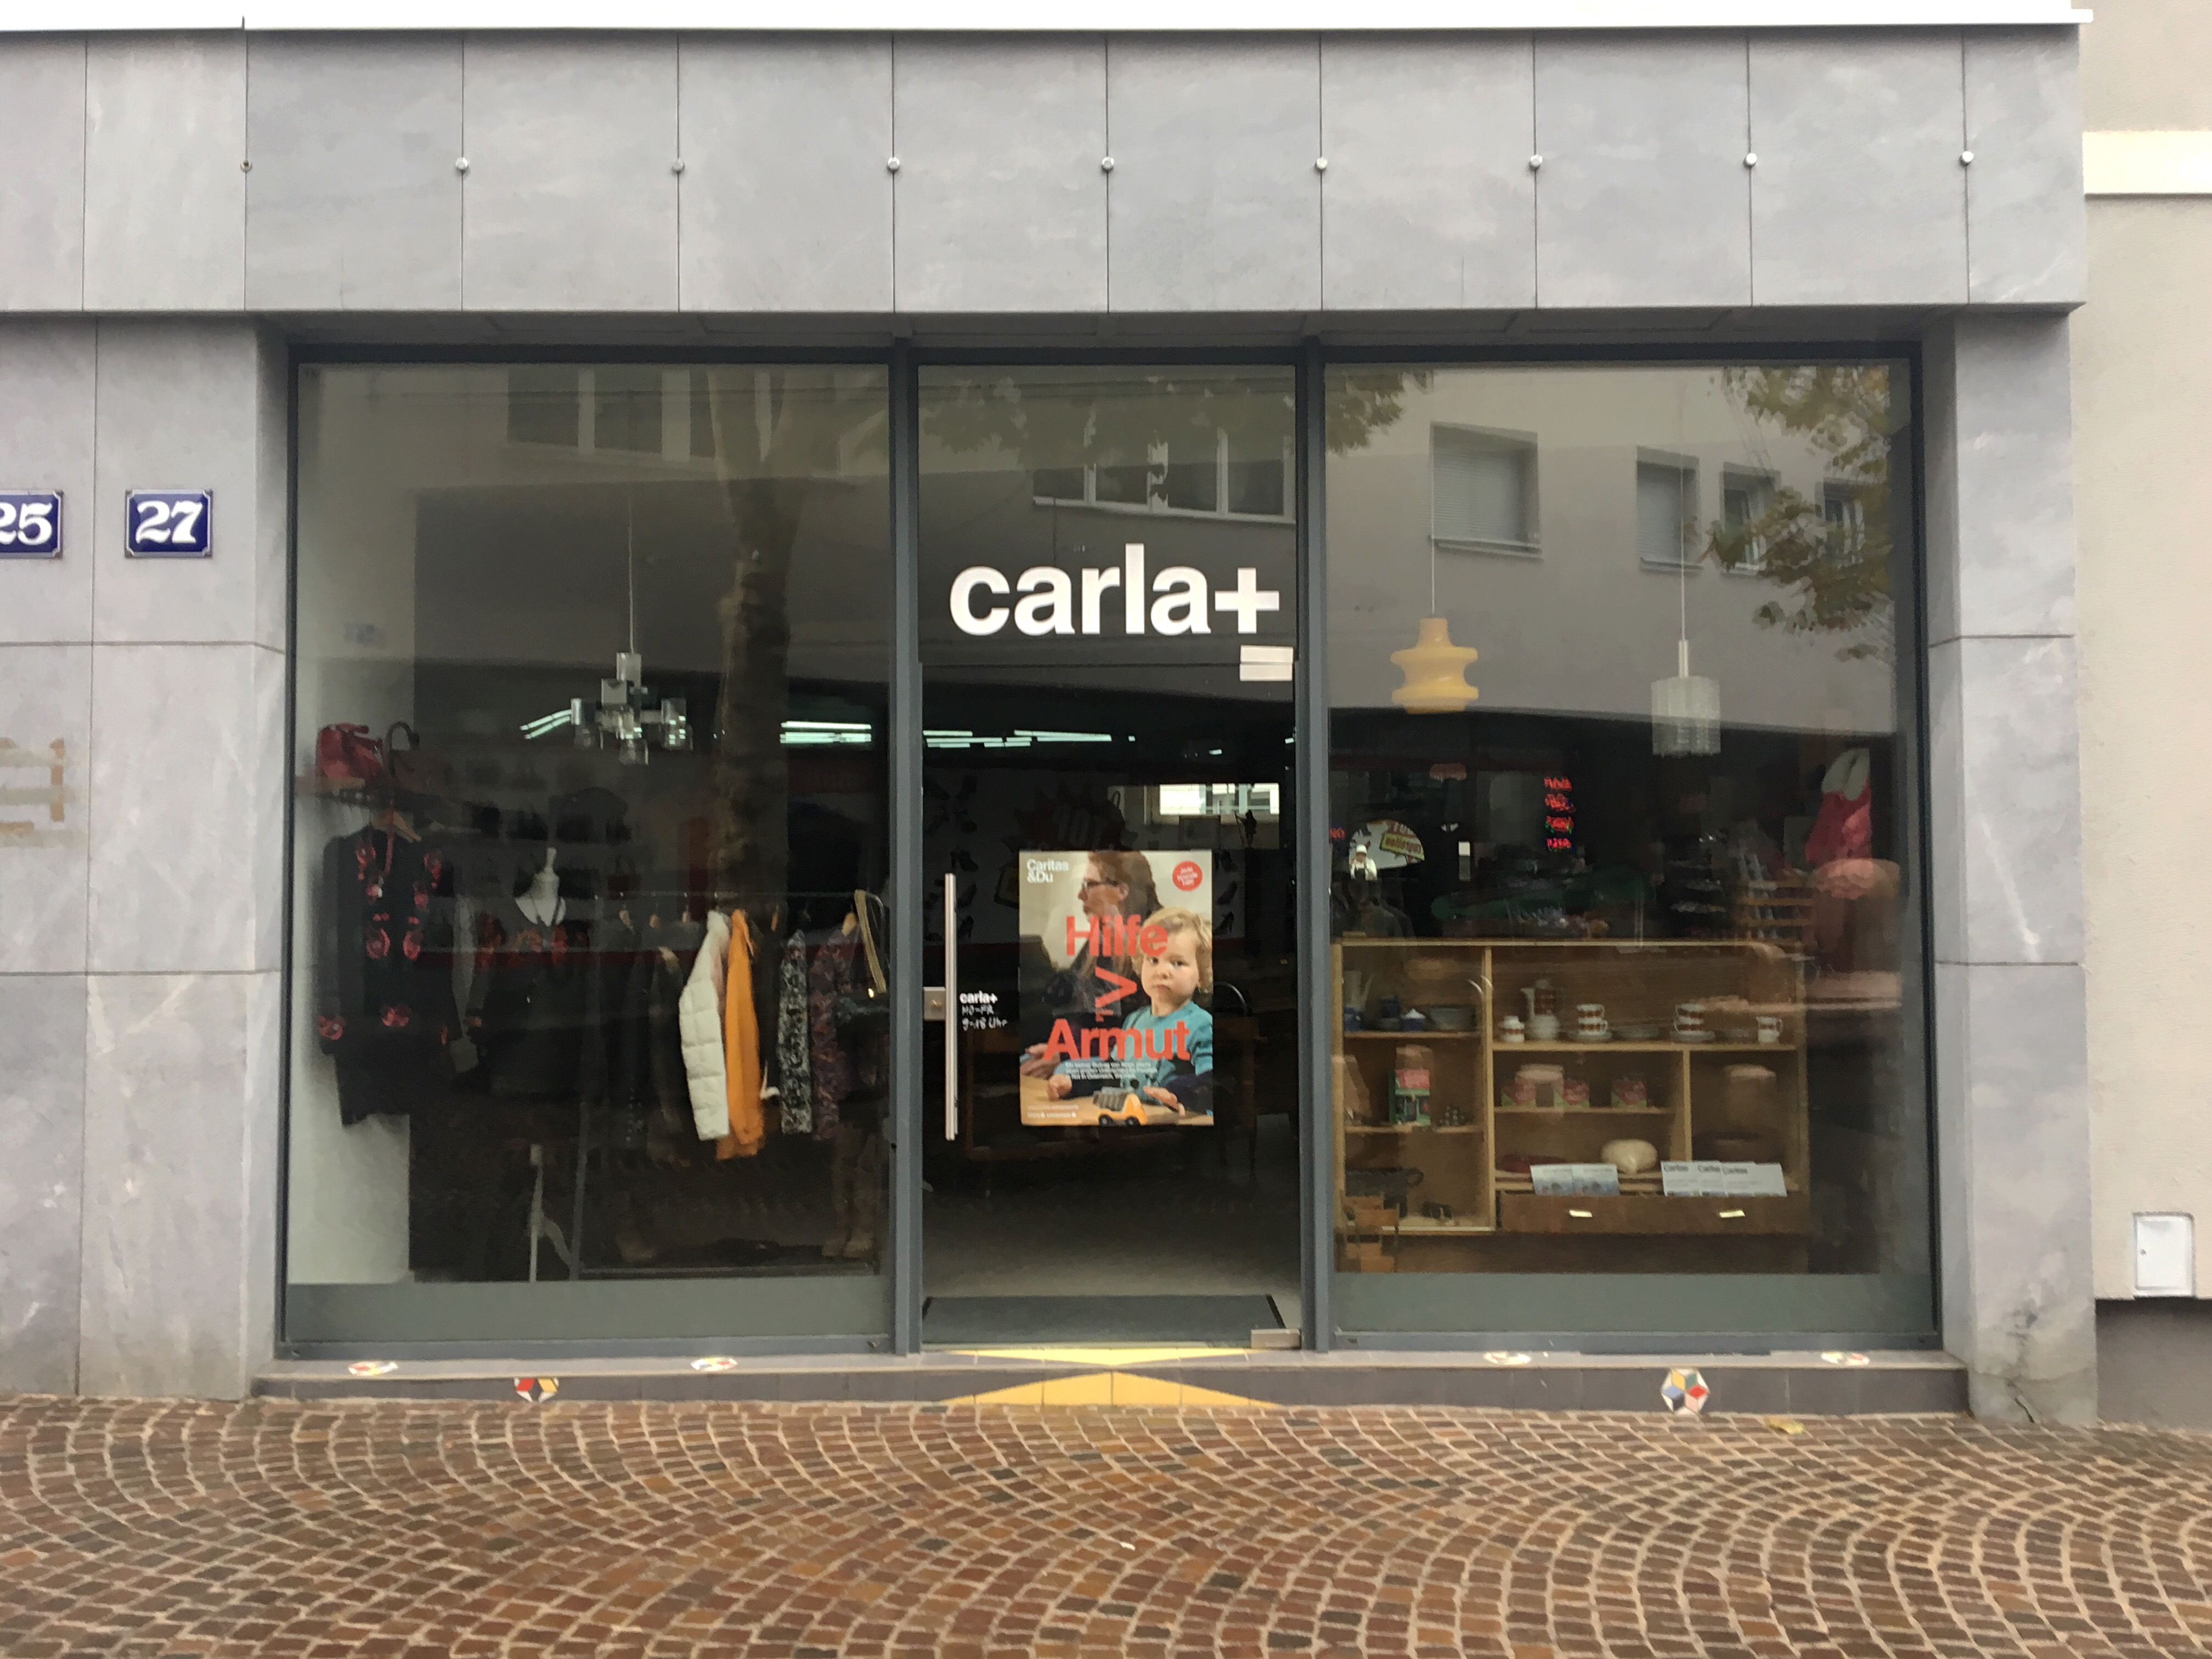 Entry area of a Caritas shop